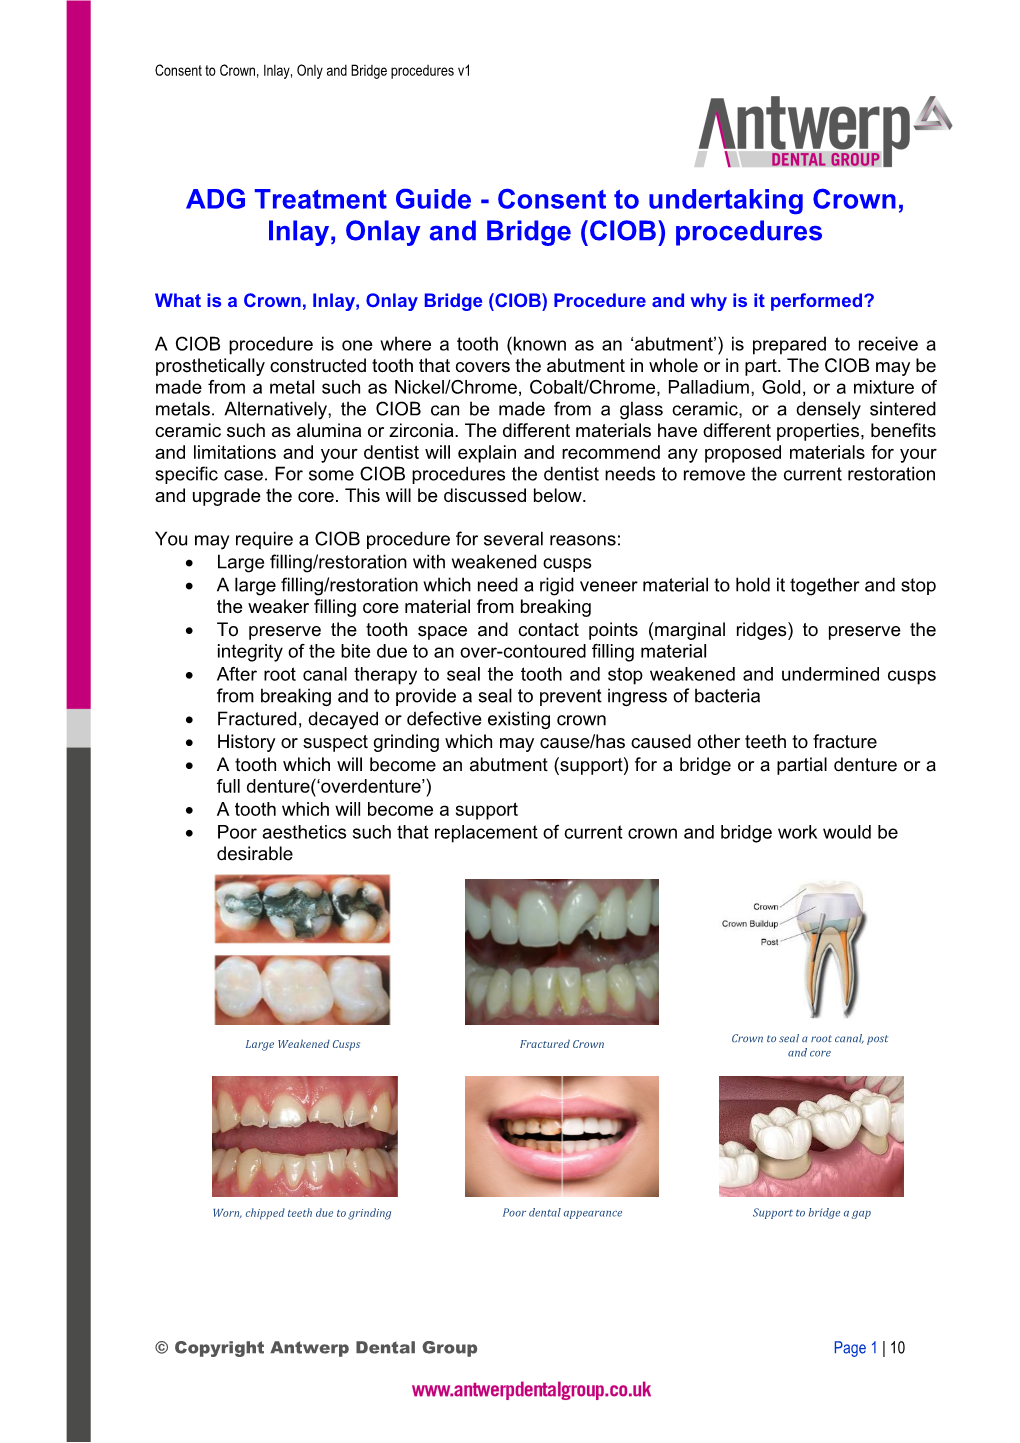 Consent to Undertaking Crown, Inlay, Onlay and Bridge (CIOB) Procedures